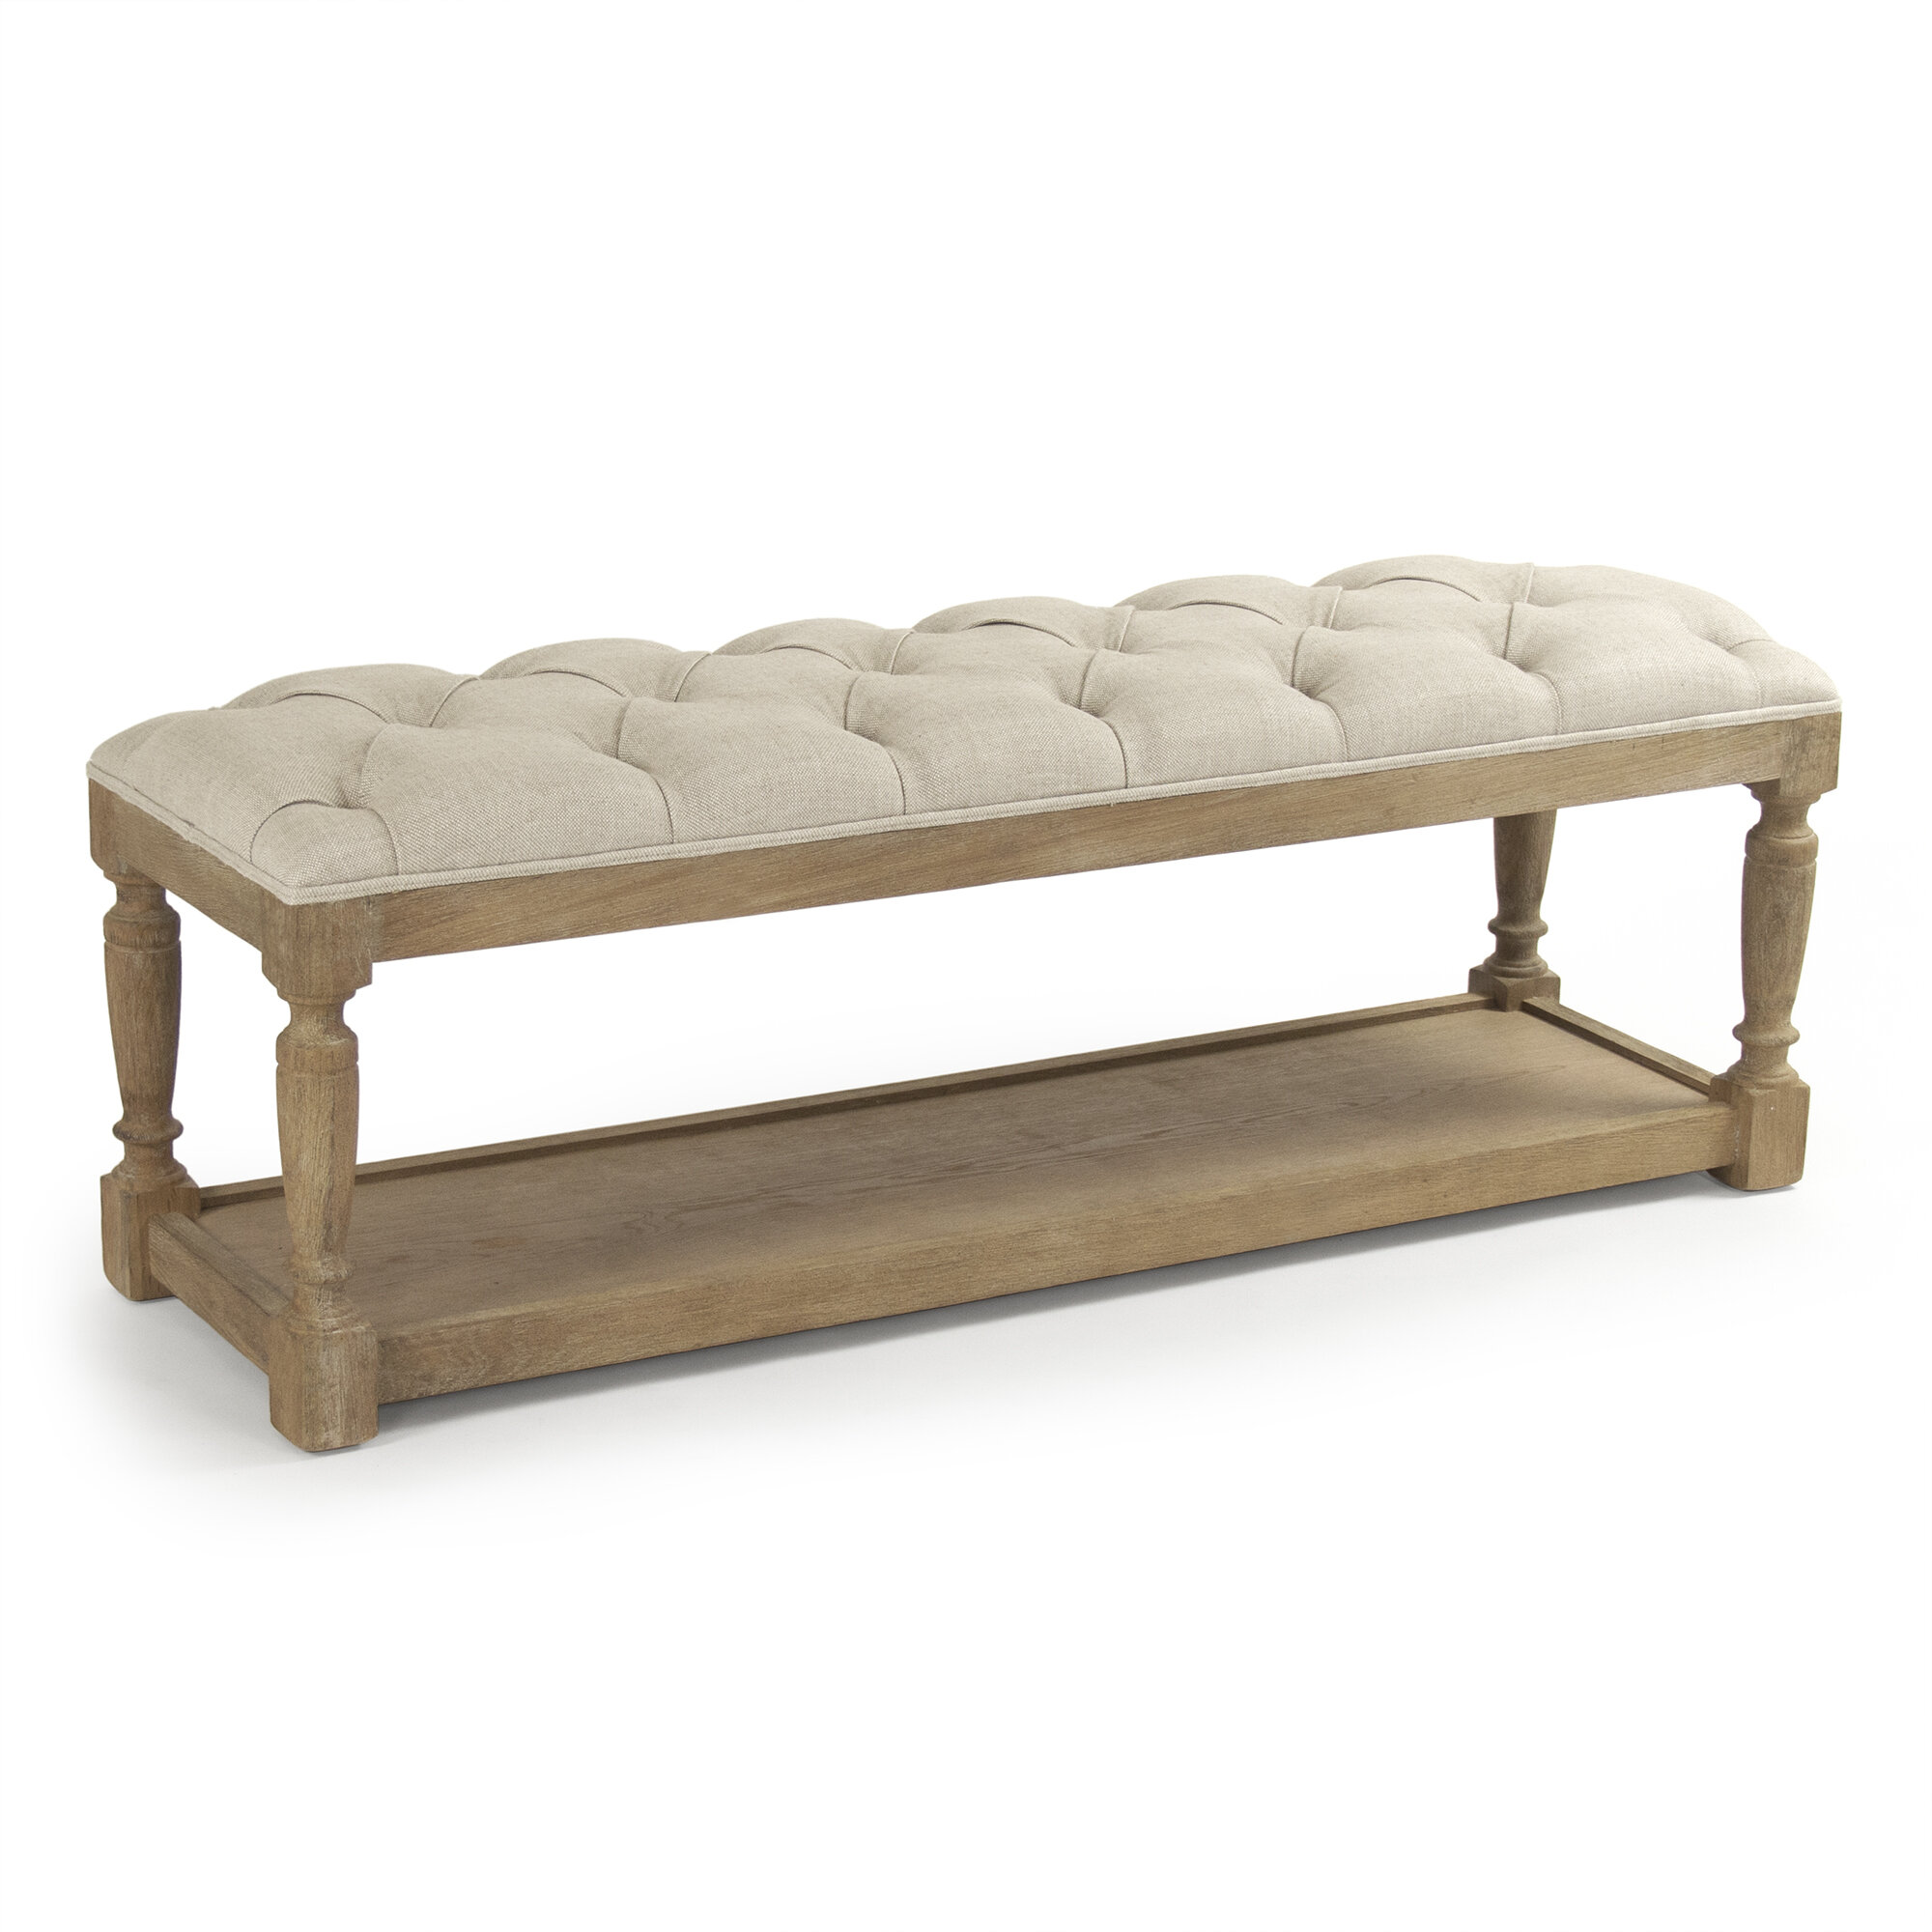 Ophelia & Co. Nueva Upholstered Storage Bench